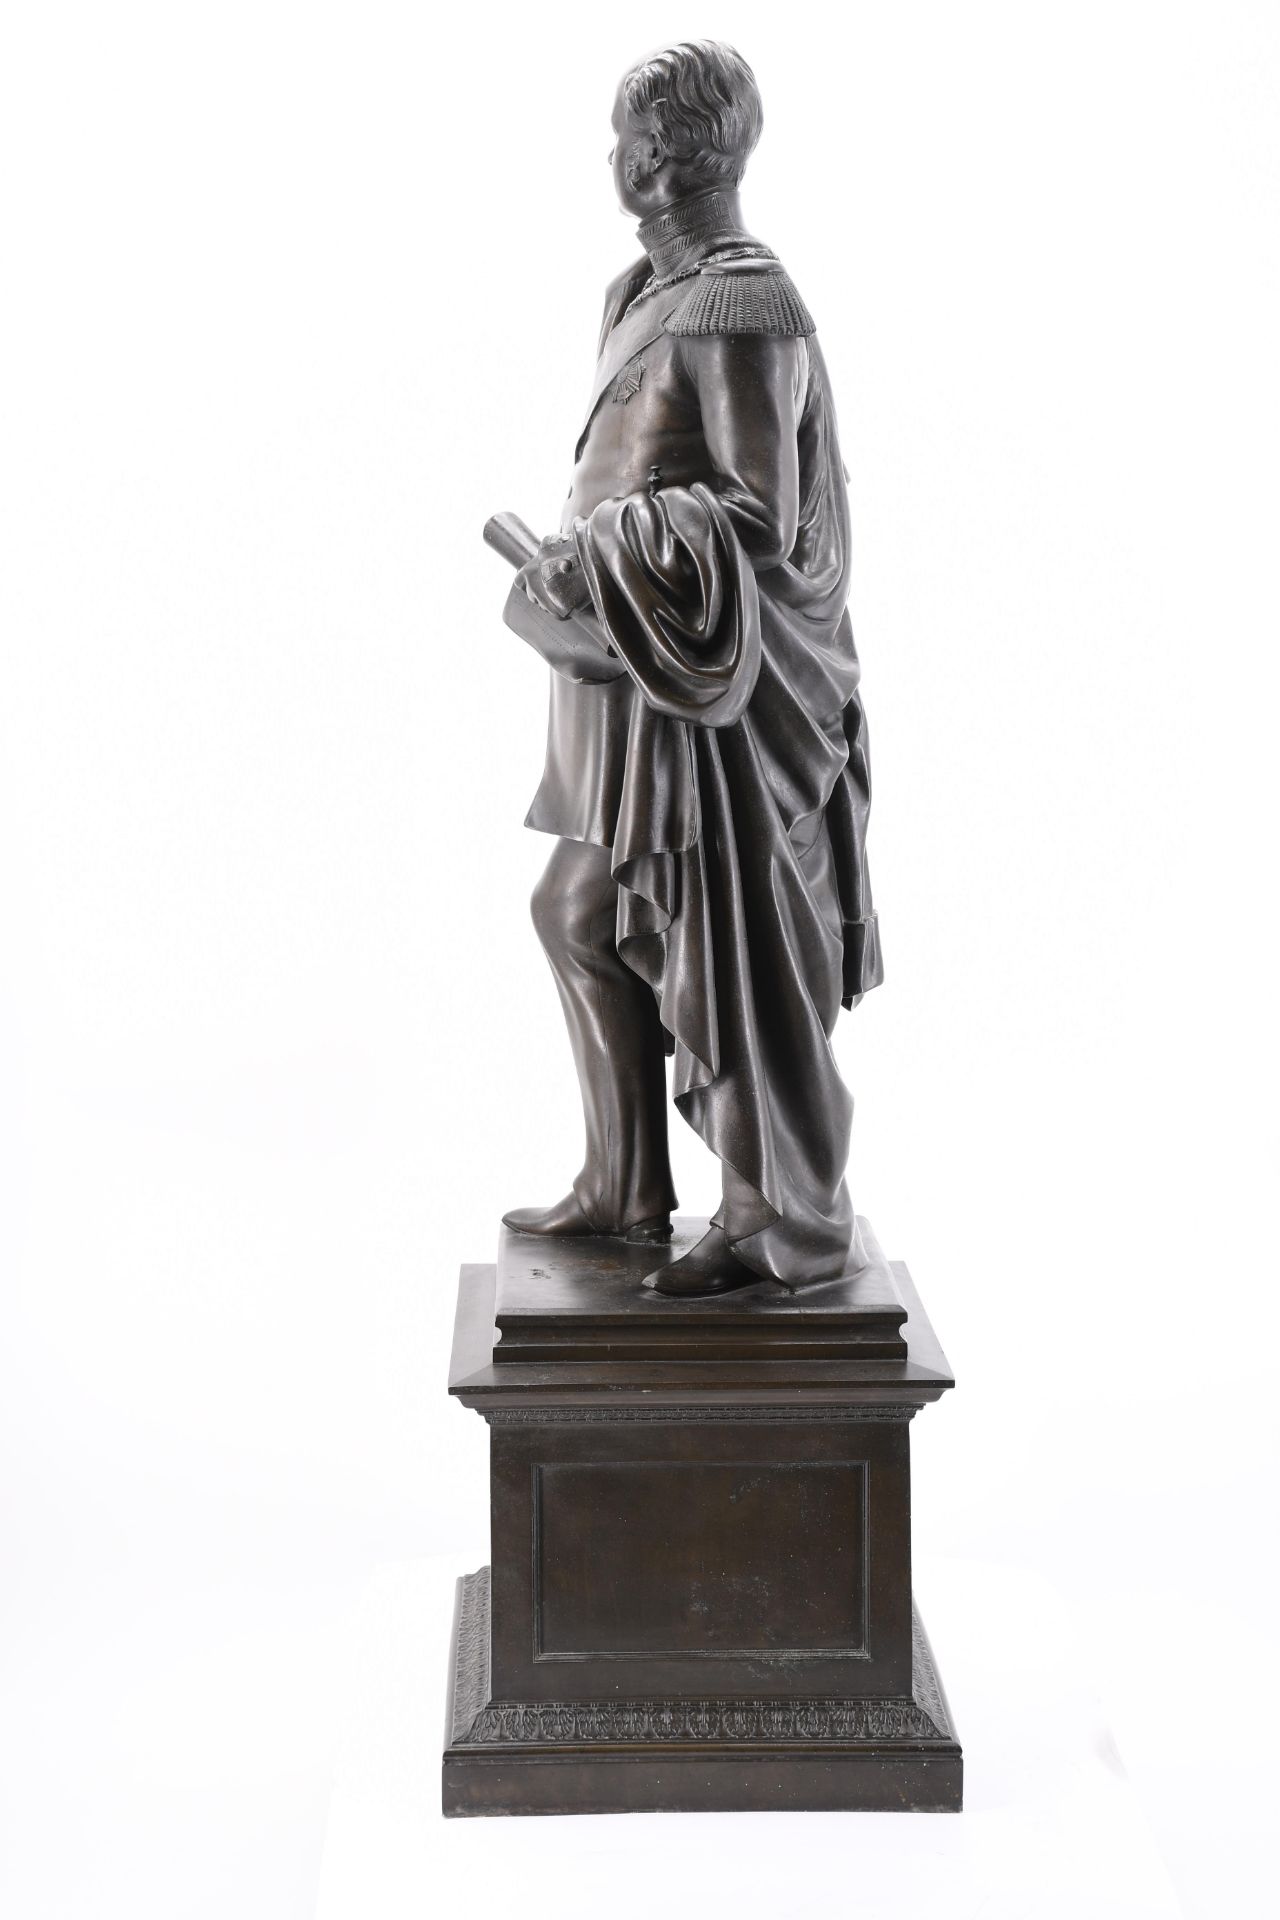 Carl Cauer 1828 Bonn - 1885 Bad Kreuznach: Statue of King Frederick William IV of Prussia - Image 6 of 12